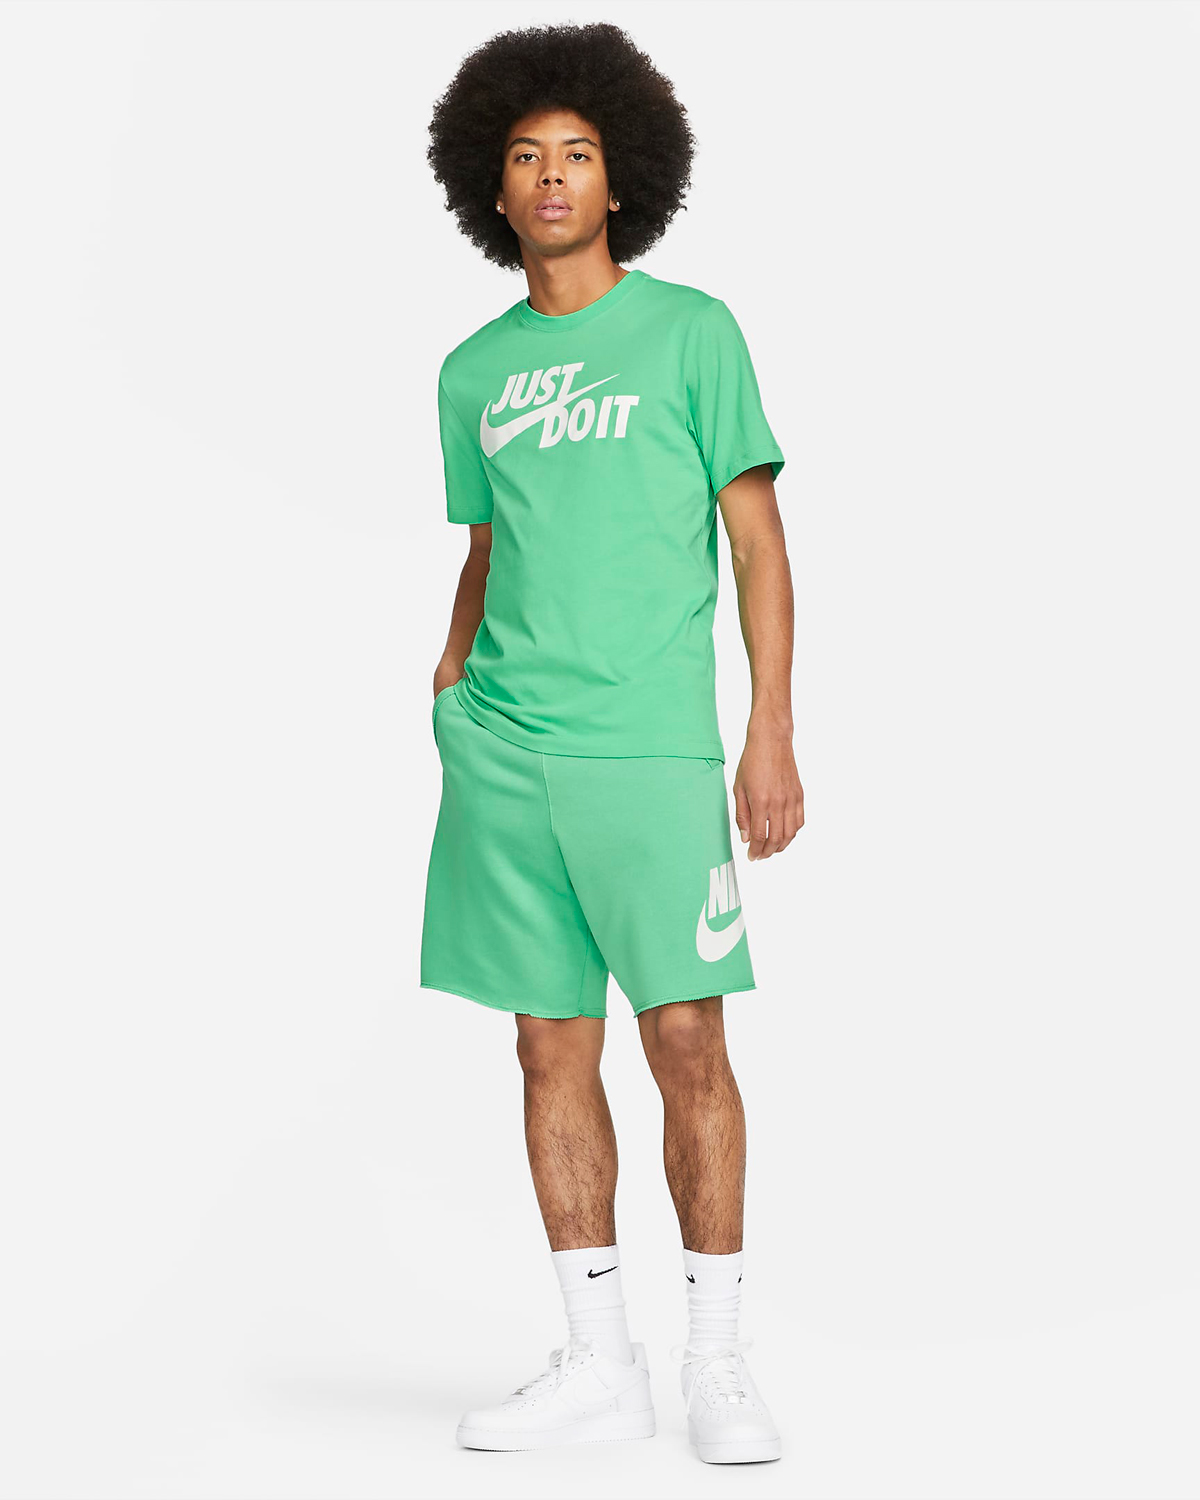 Nike-Sportswear-JDI-T-Shirt-Spring-Green-Outfit